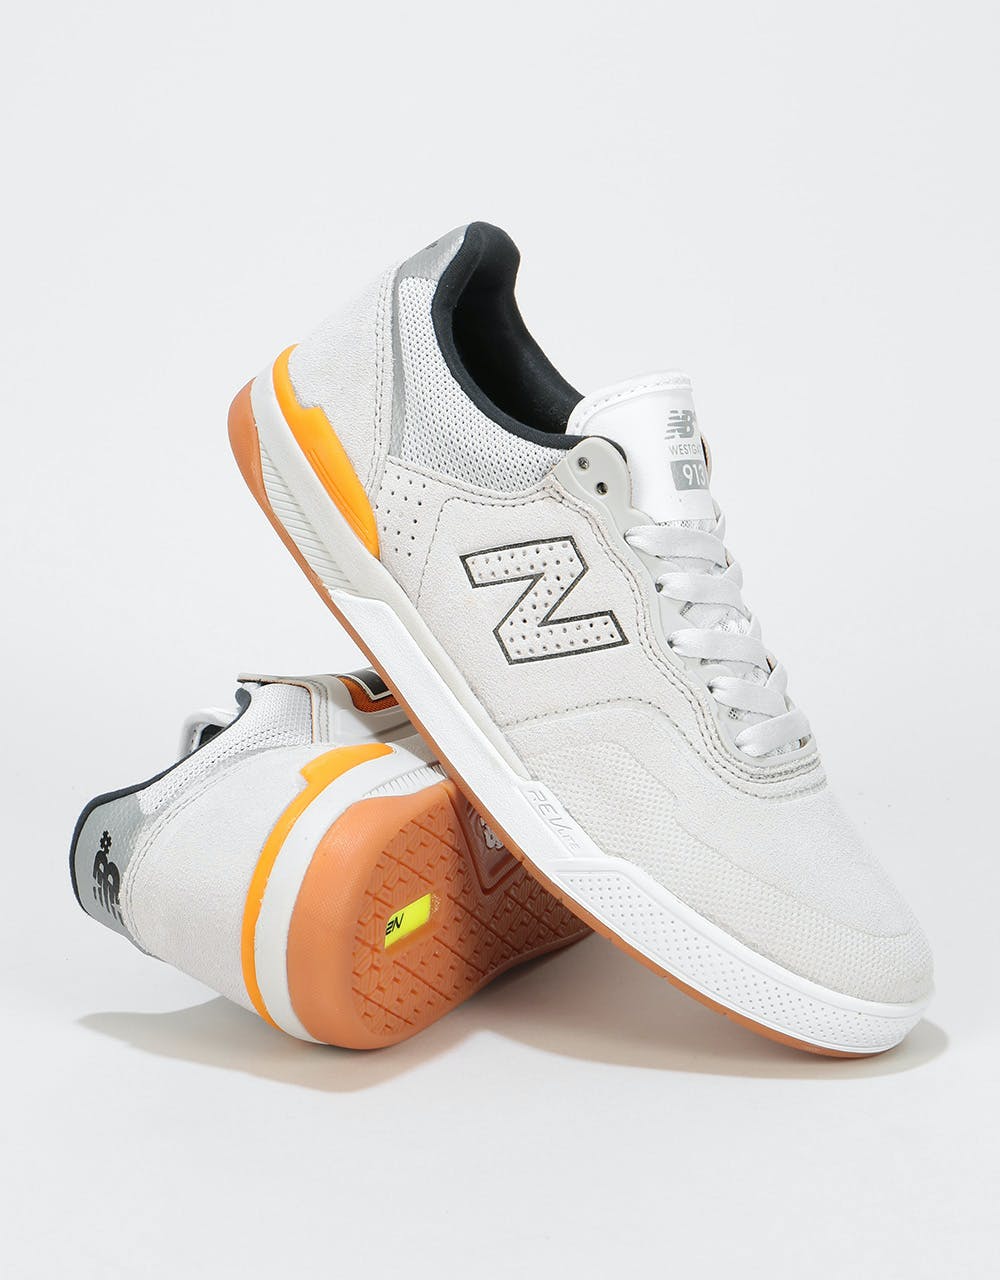 New Balance Numeric Westgate 913 Skate Shoes - Silver/Orange